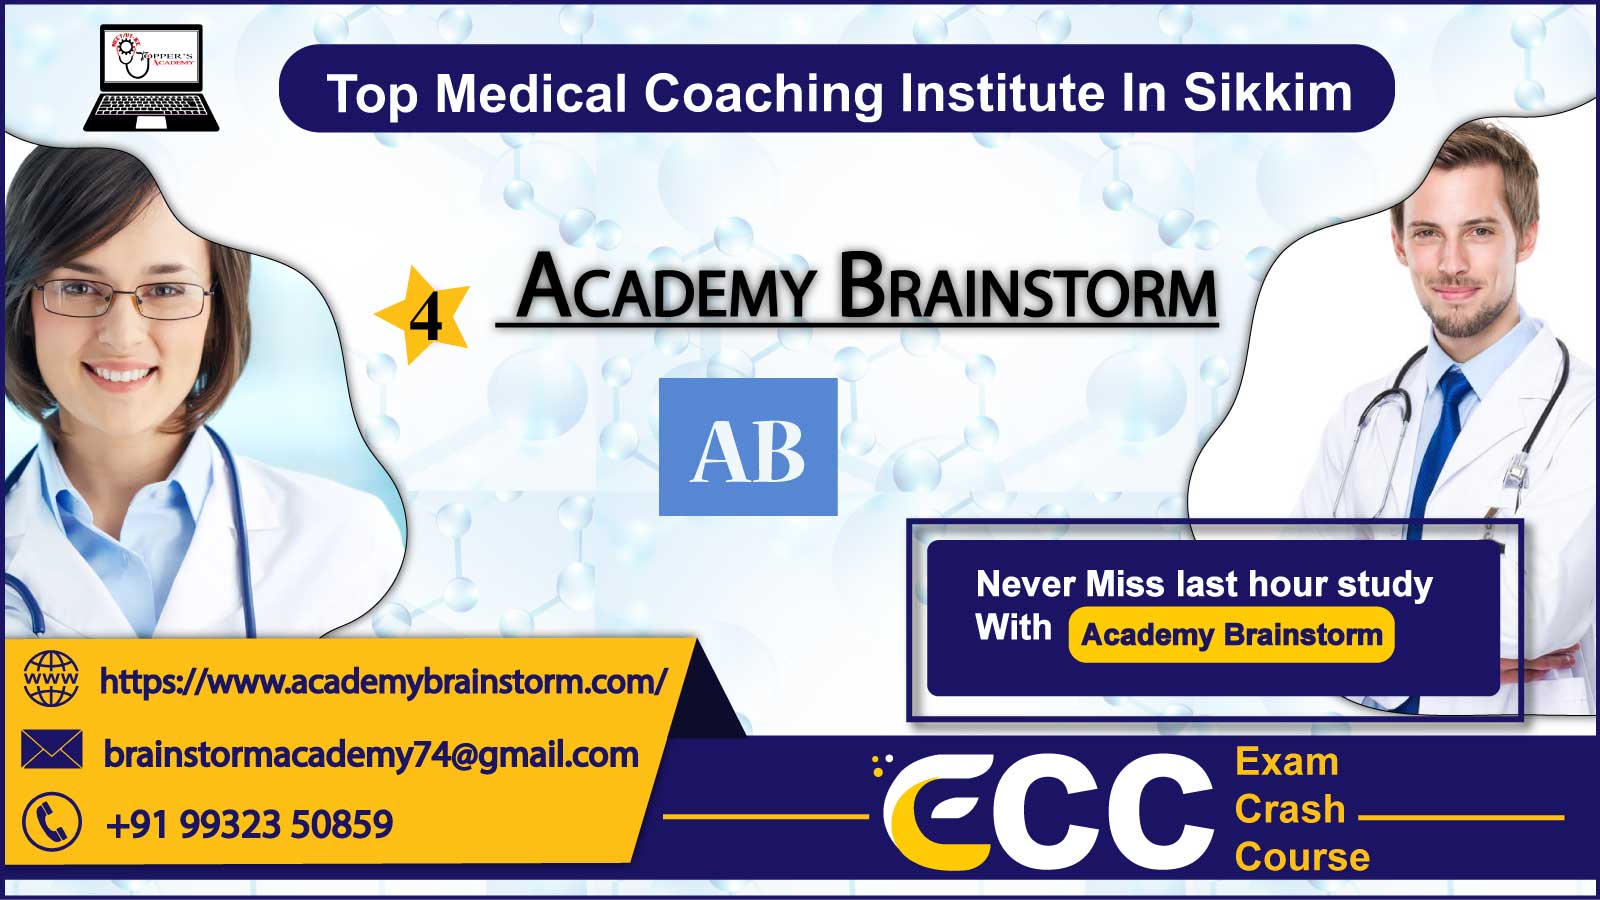 Academy Brainstorm NEET Coaching In Sikkim